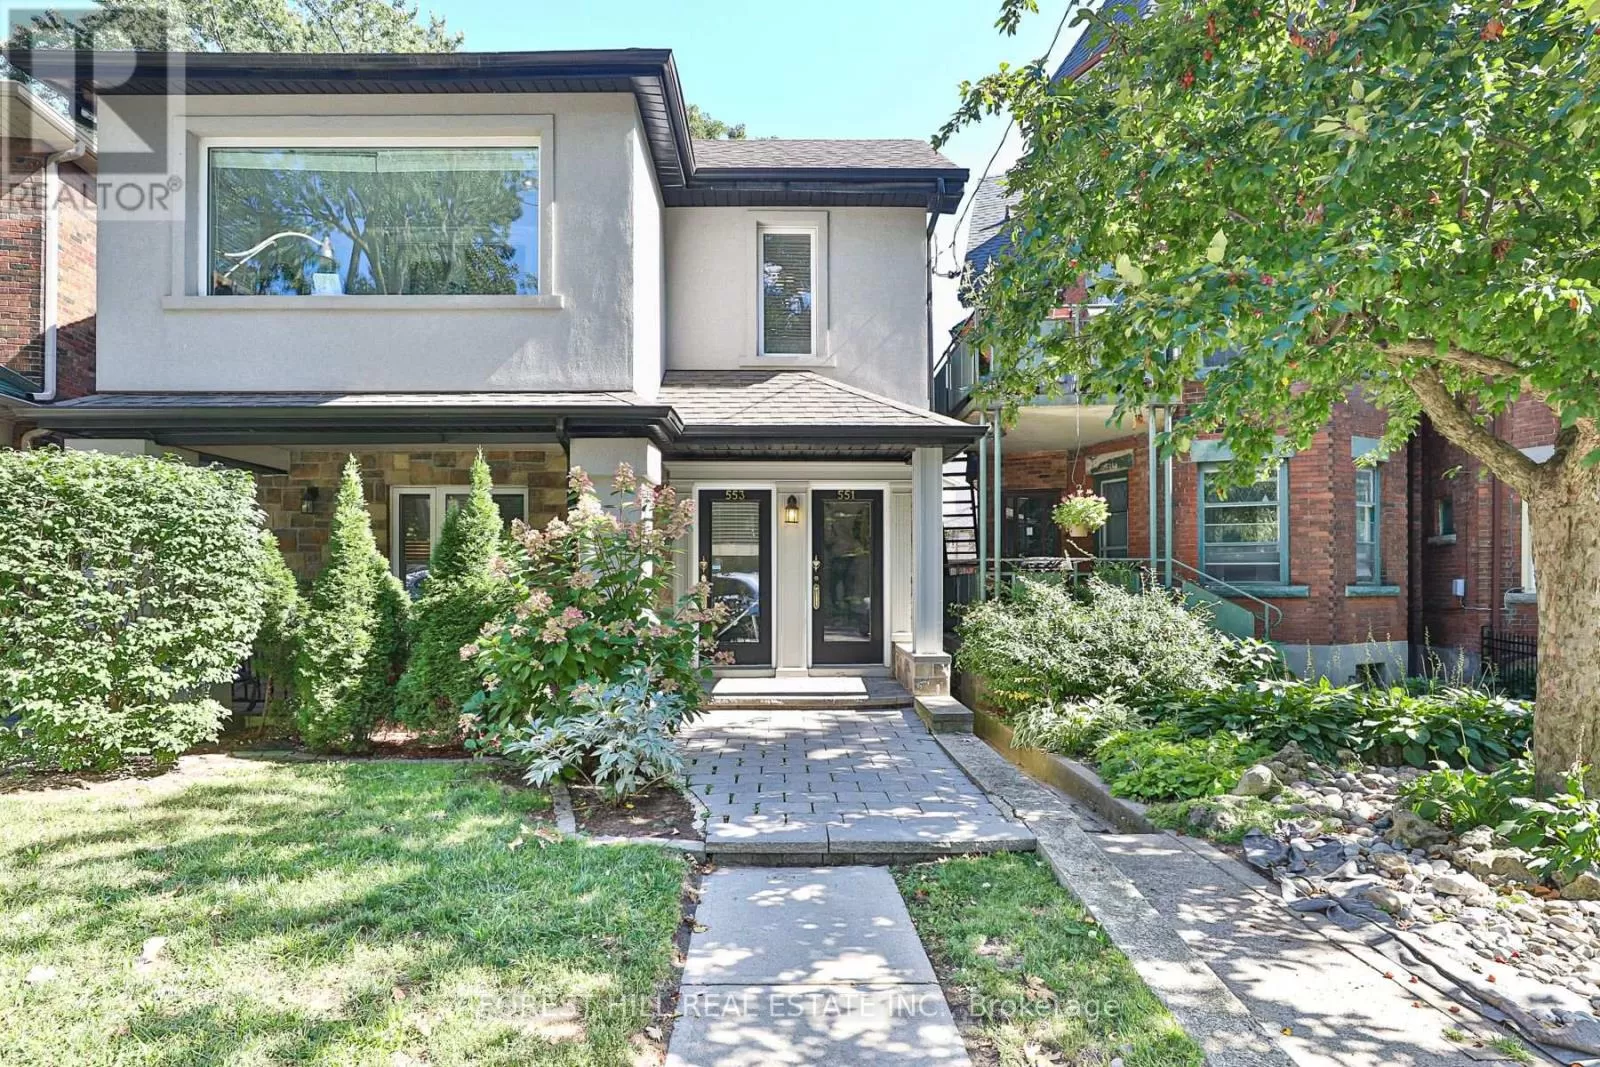 Fourplex for rent: 551-553 Indian Road, Toronto, Ontario M6P 2B9